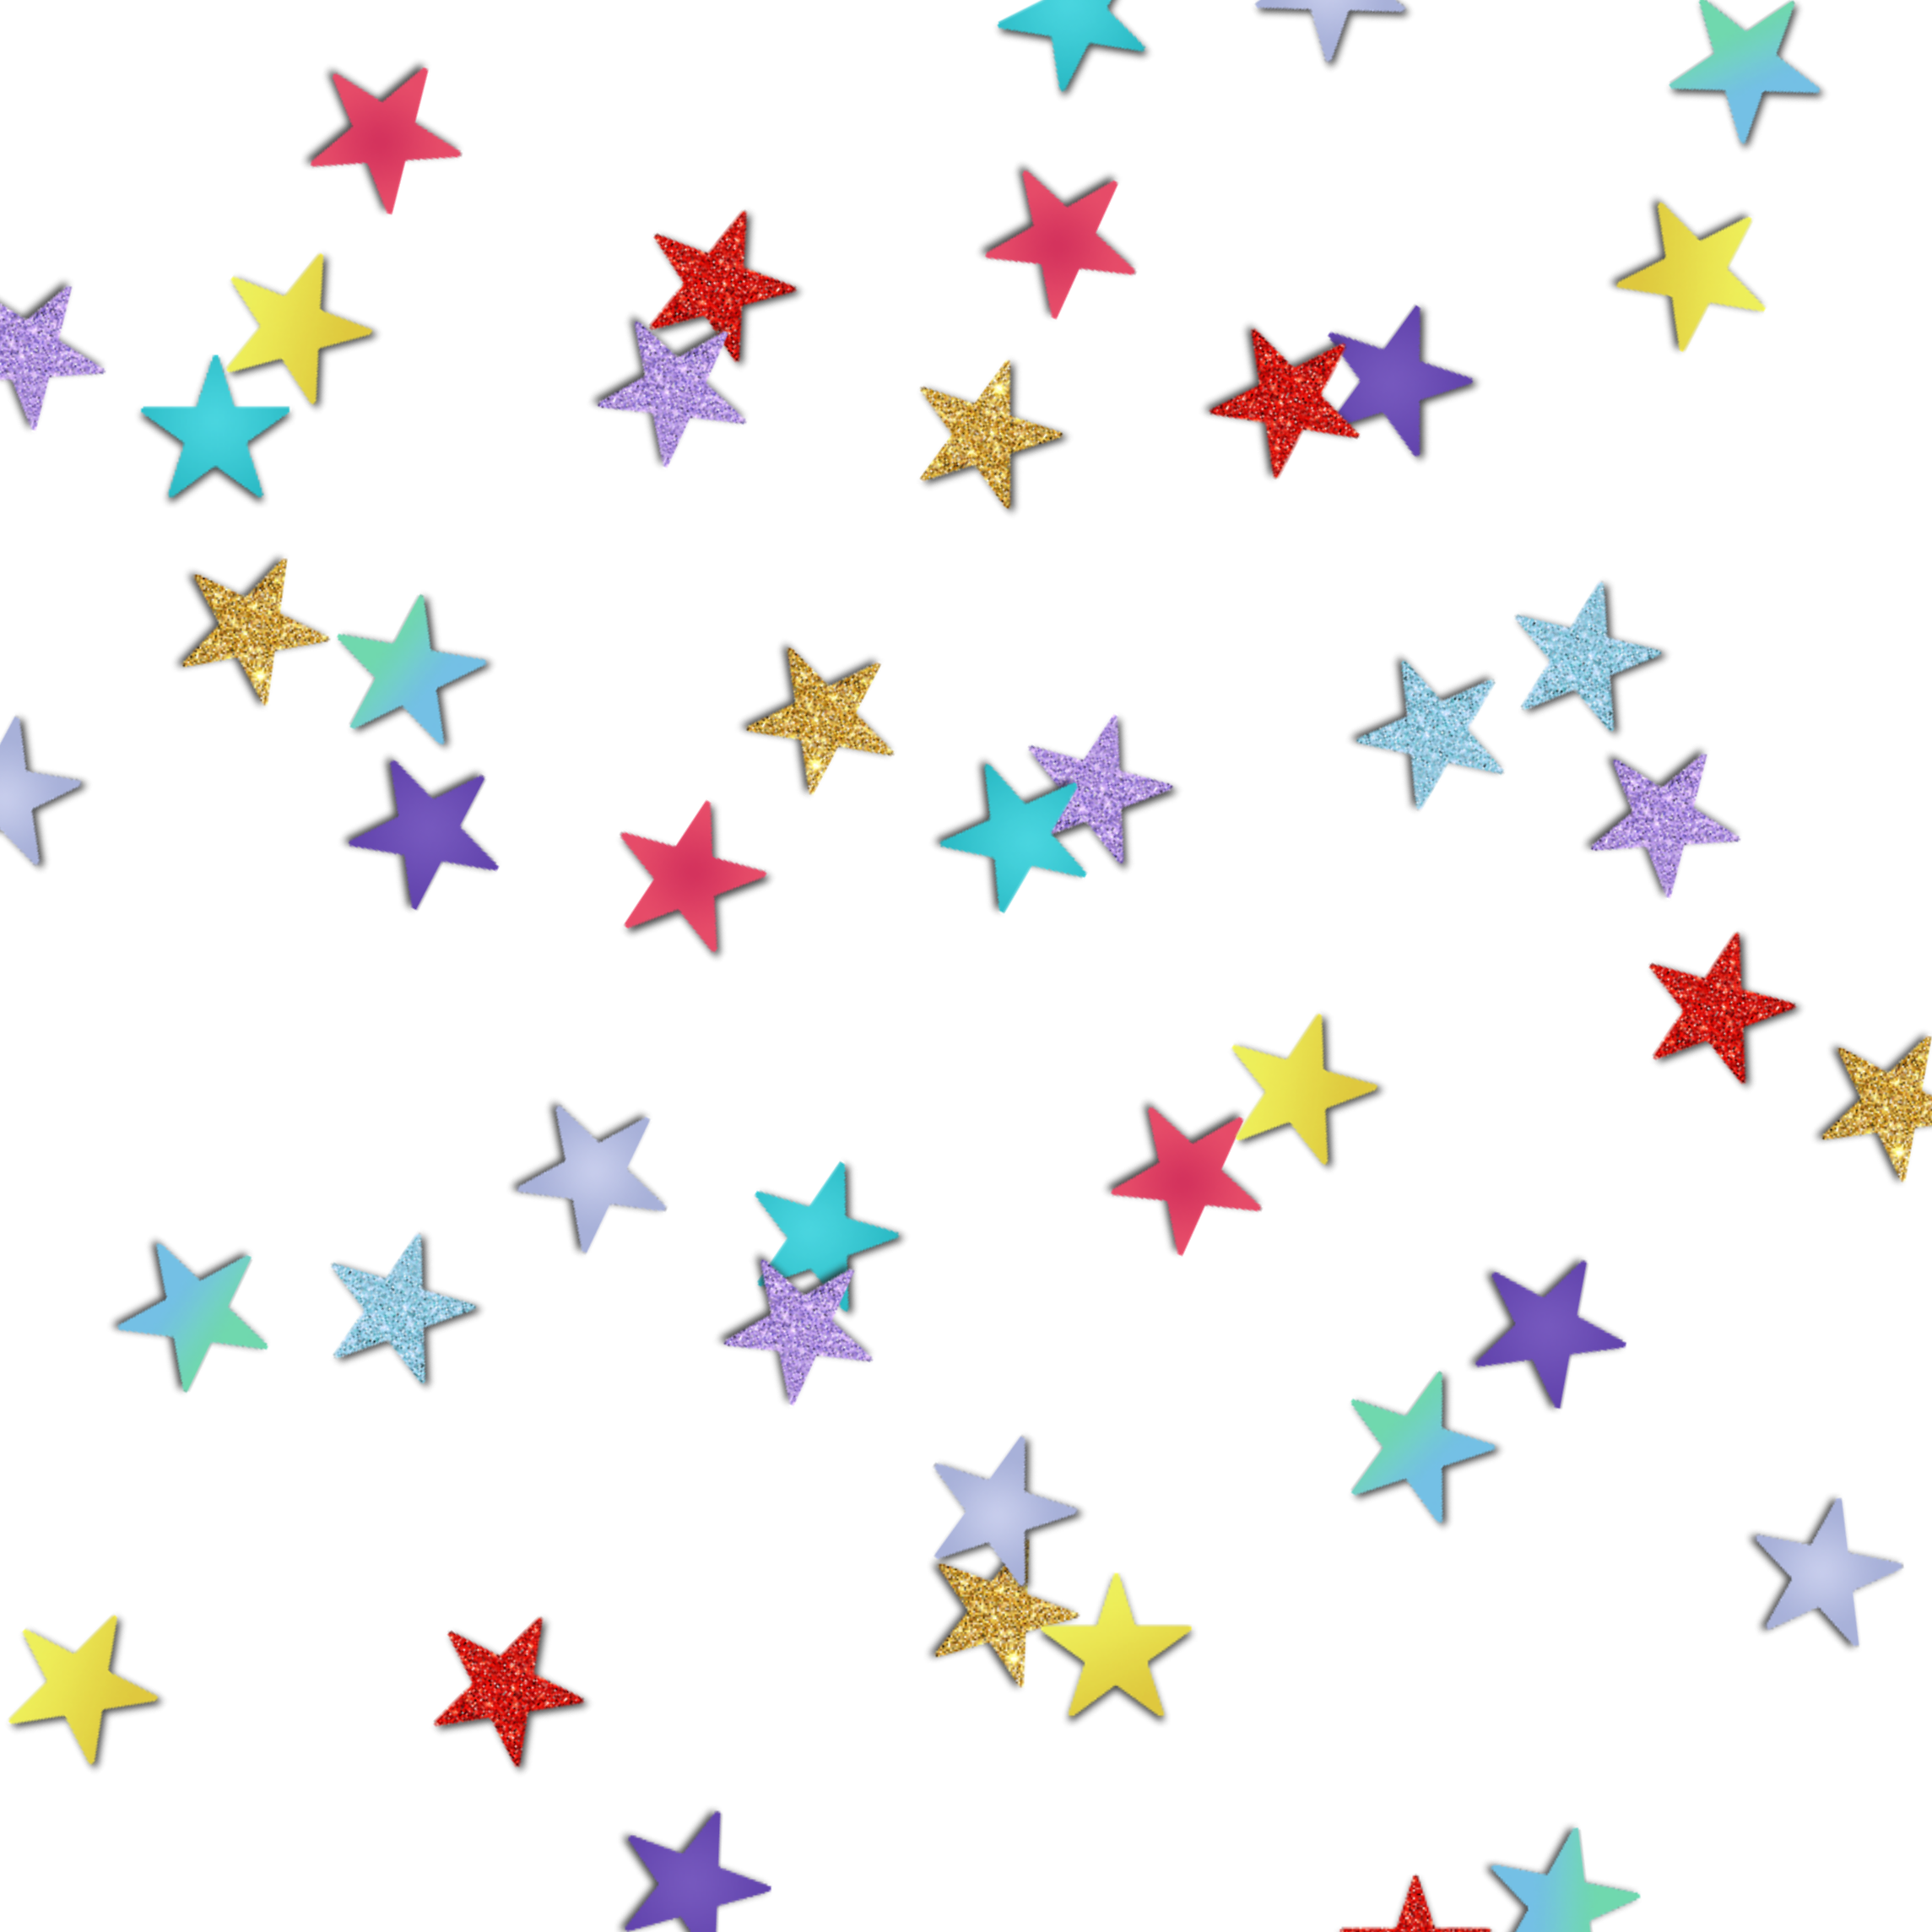 about stars estrellas fondo chispas backgrounds freetoedit #stars #estrella...